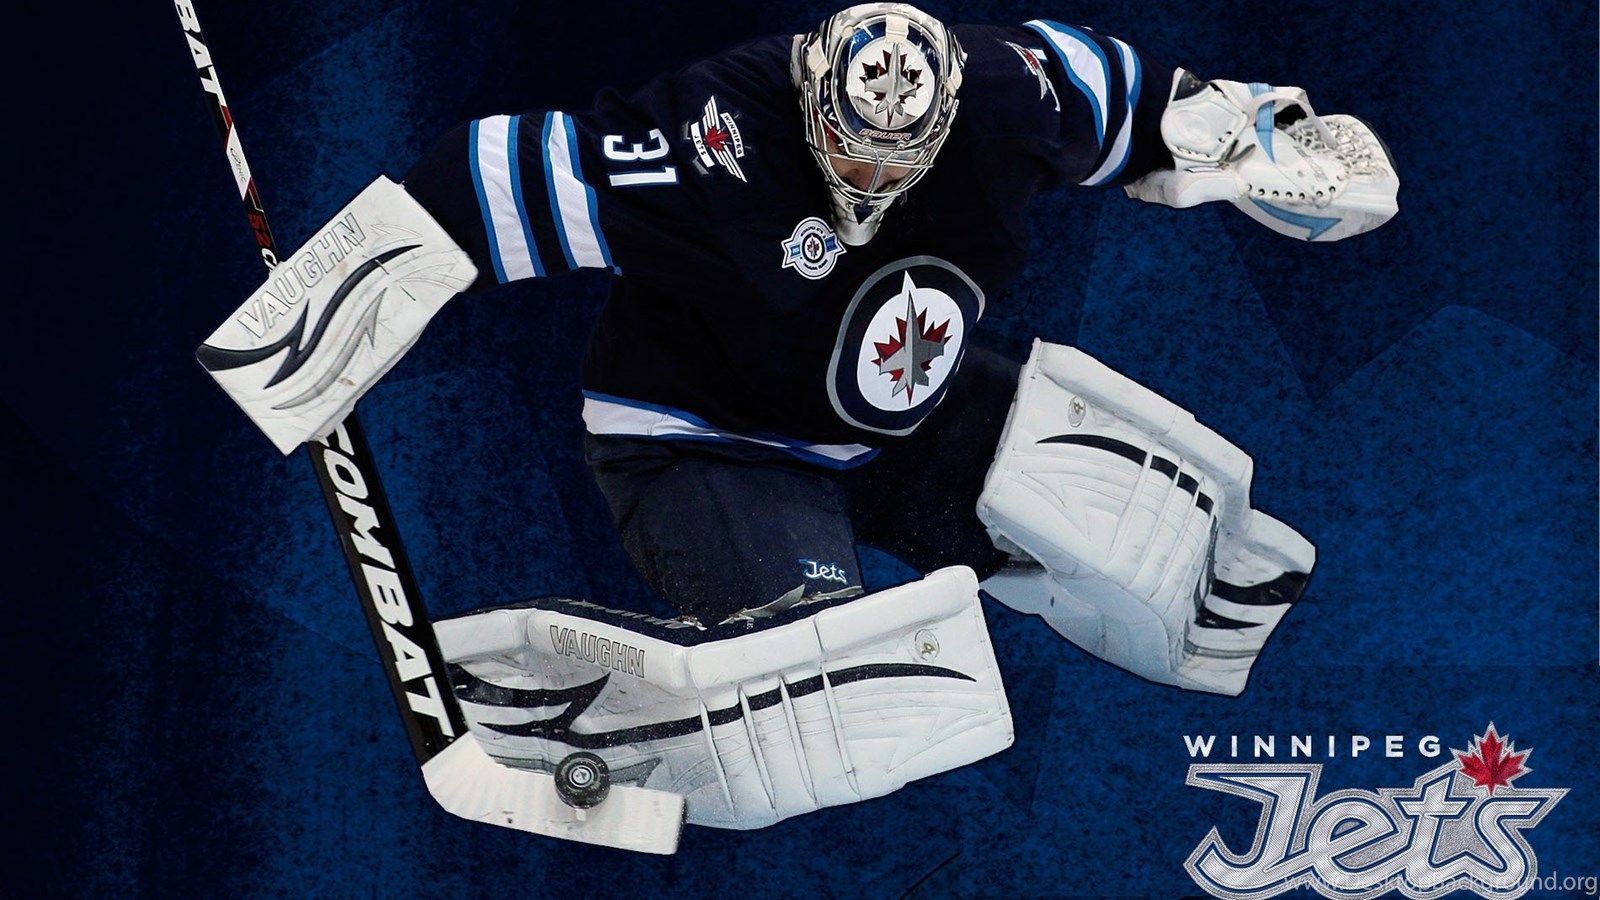 NHL Winnipeg Jets Hockey Player Wallpaper HD. Free Desktop. Desktop Background